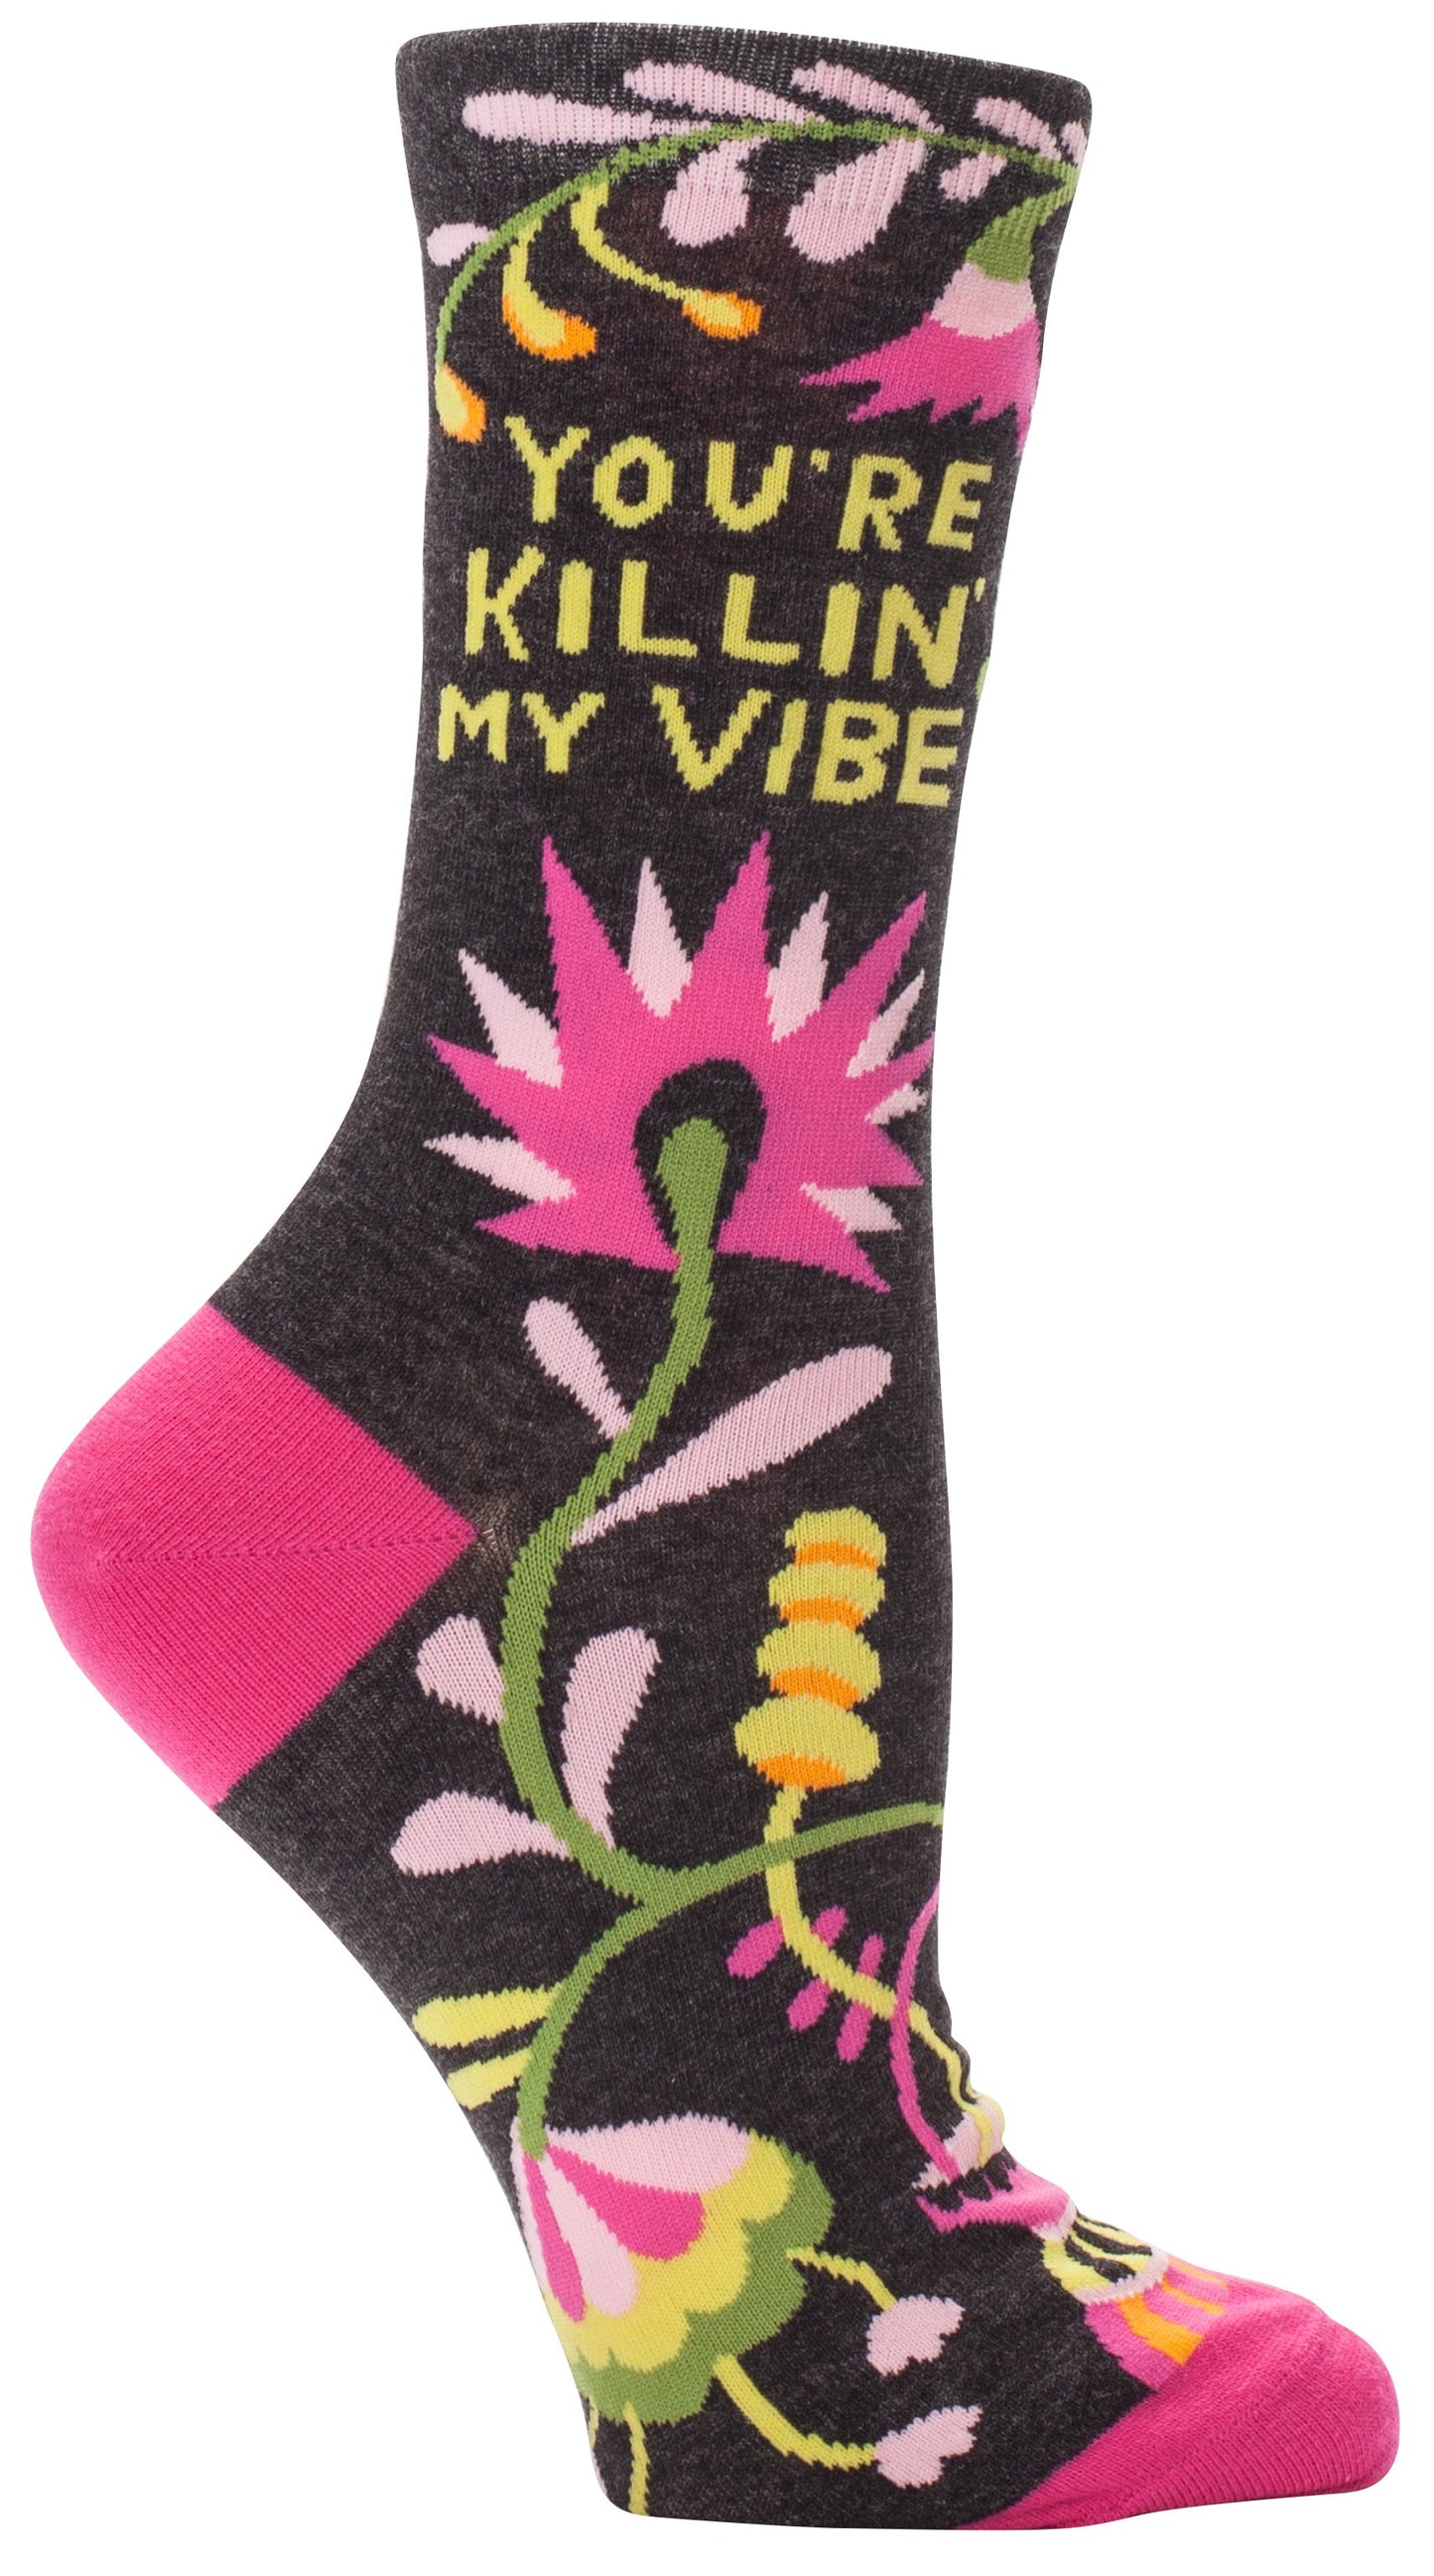 Blue Q - Women's Crew Socks - You're Killin' My Vibe